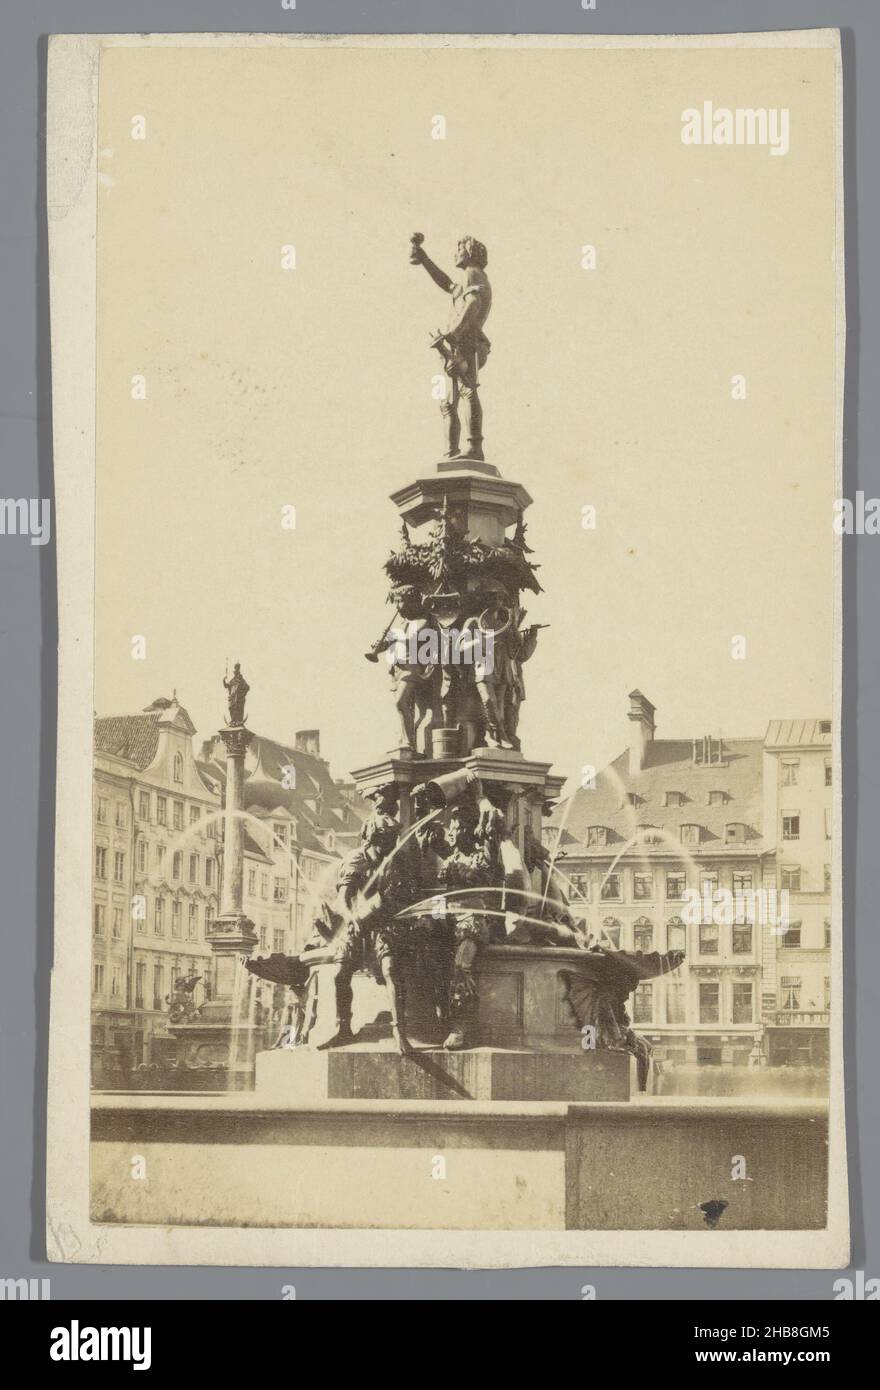 Fischbrunnen on Marienplatz in Munich, Munich, spring on Mauenplatz (title on object), anonymous, Konrad Knoll, München, 1855 - 1885, paper, cardboard, albumen print, height 100 mm × width 64 mm Stock Photo